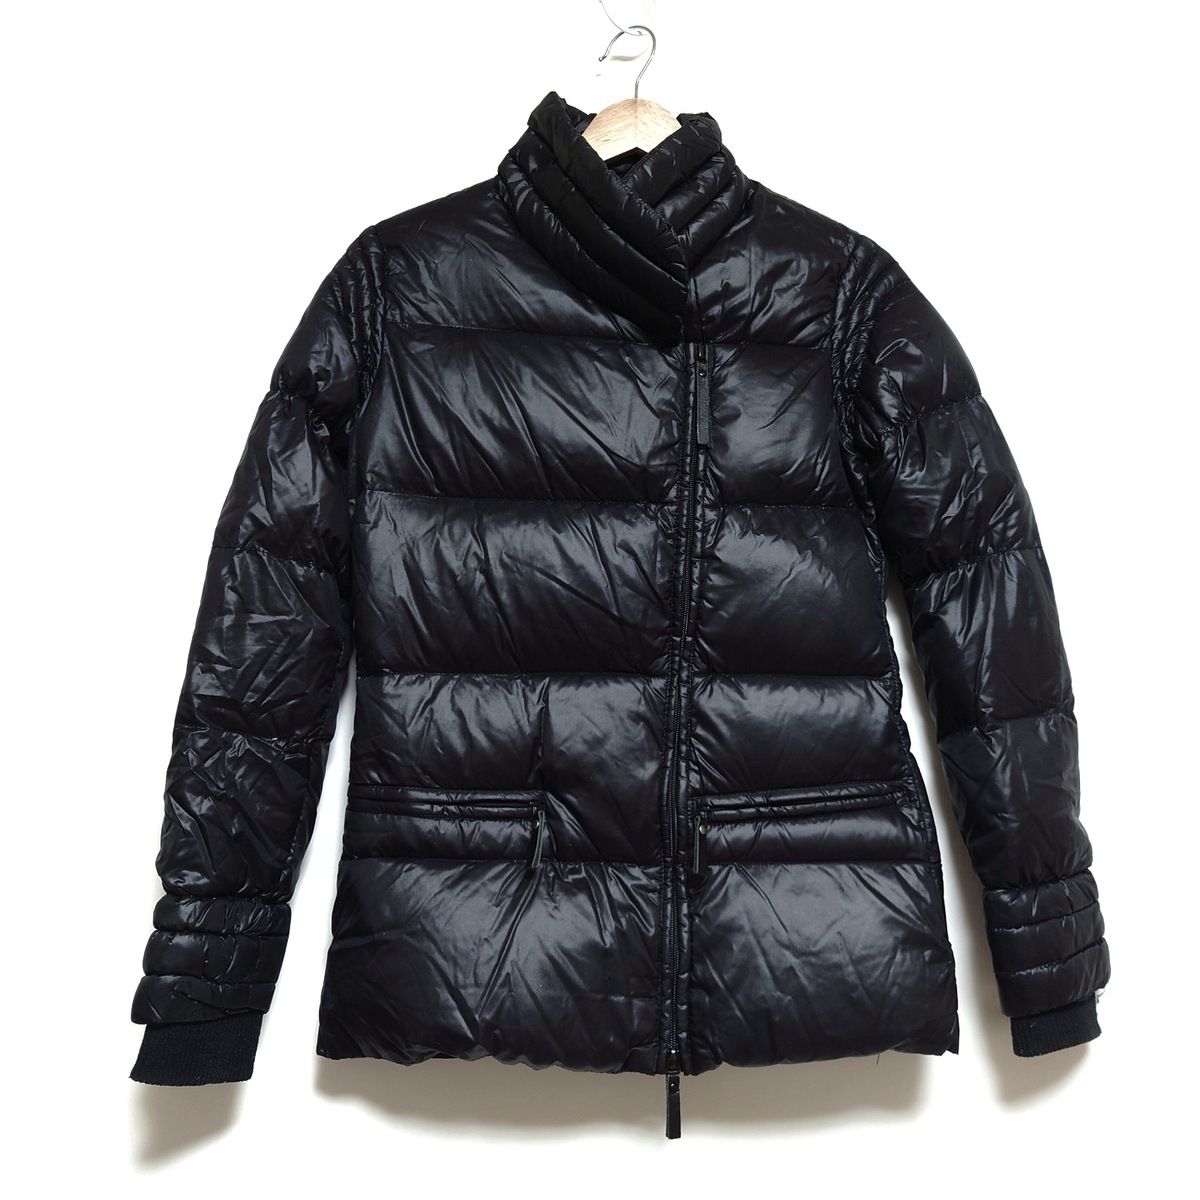 DIESEL BlackGold(ディーゼルブラックゴールド) ダウンジャケット サイズXXS XS レディース - 黒 長袖/冬